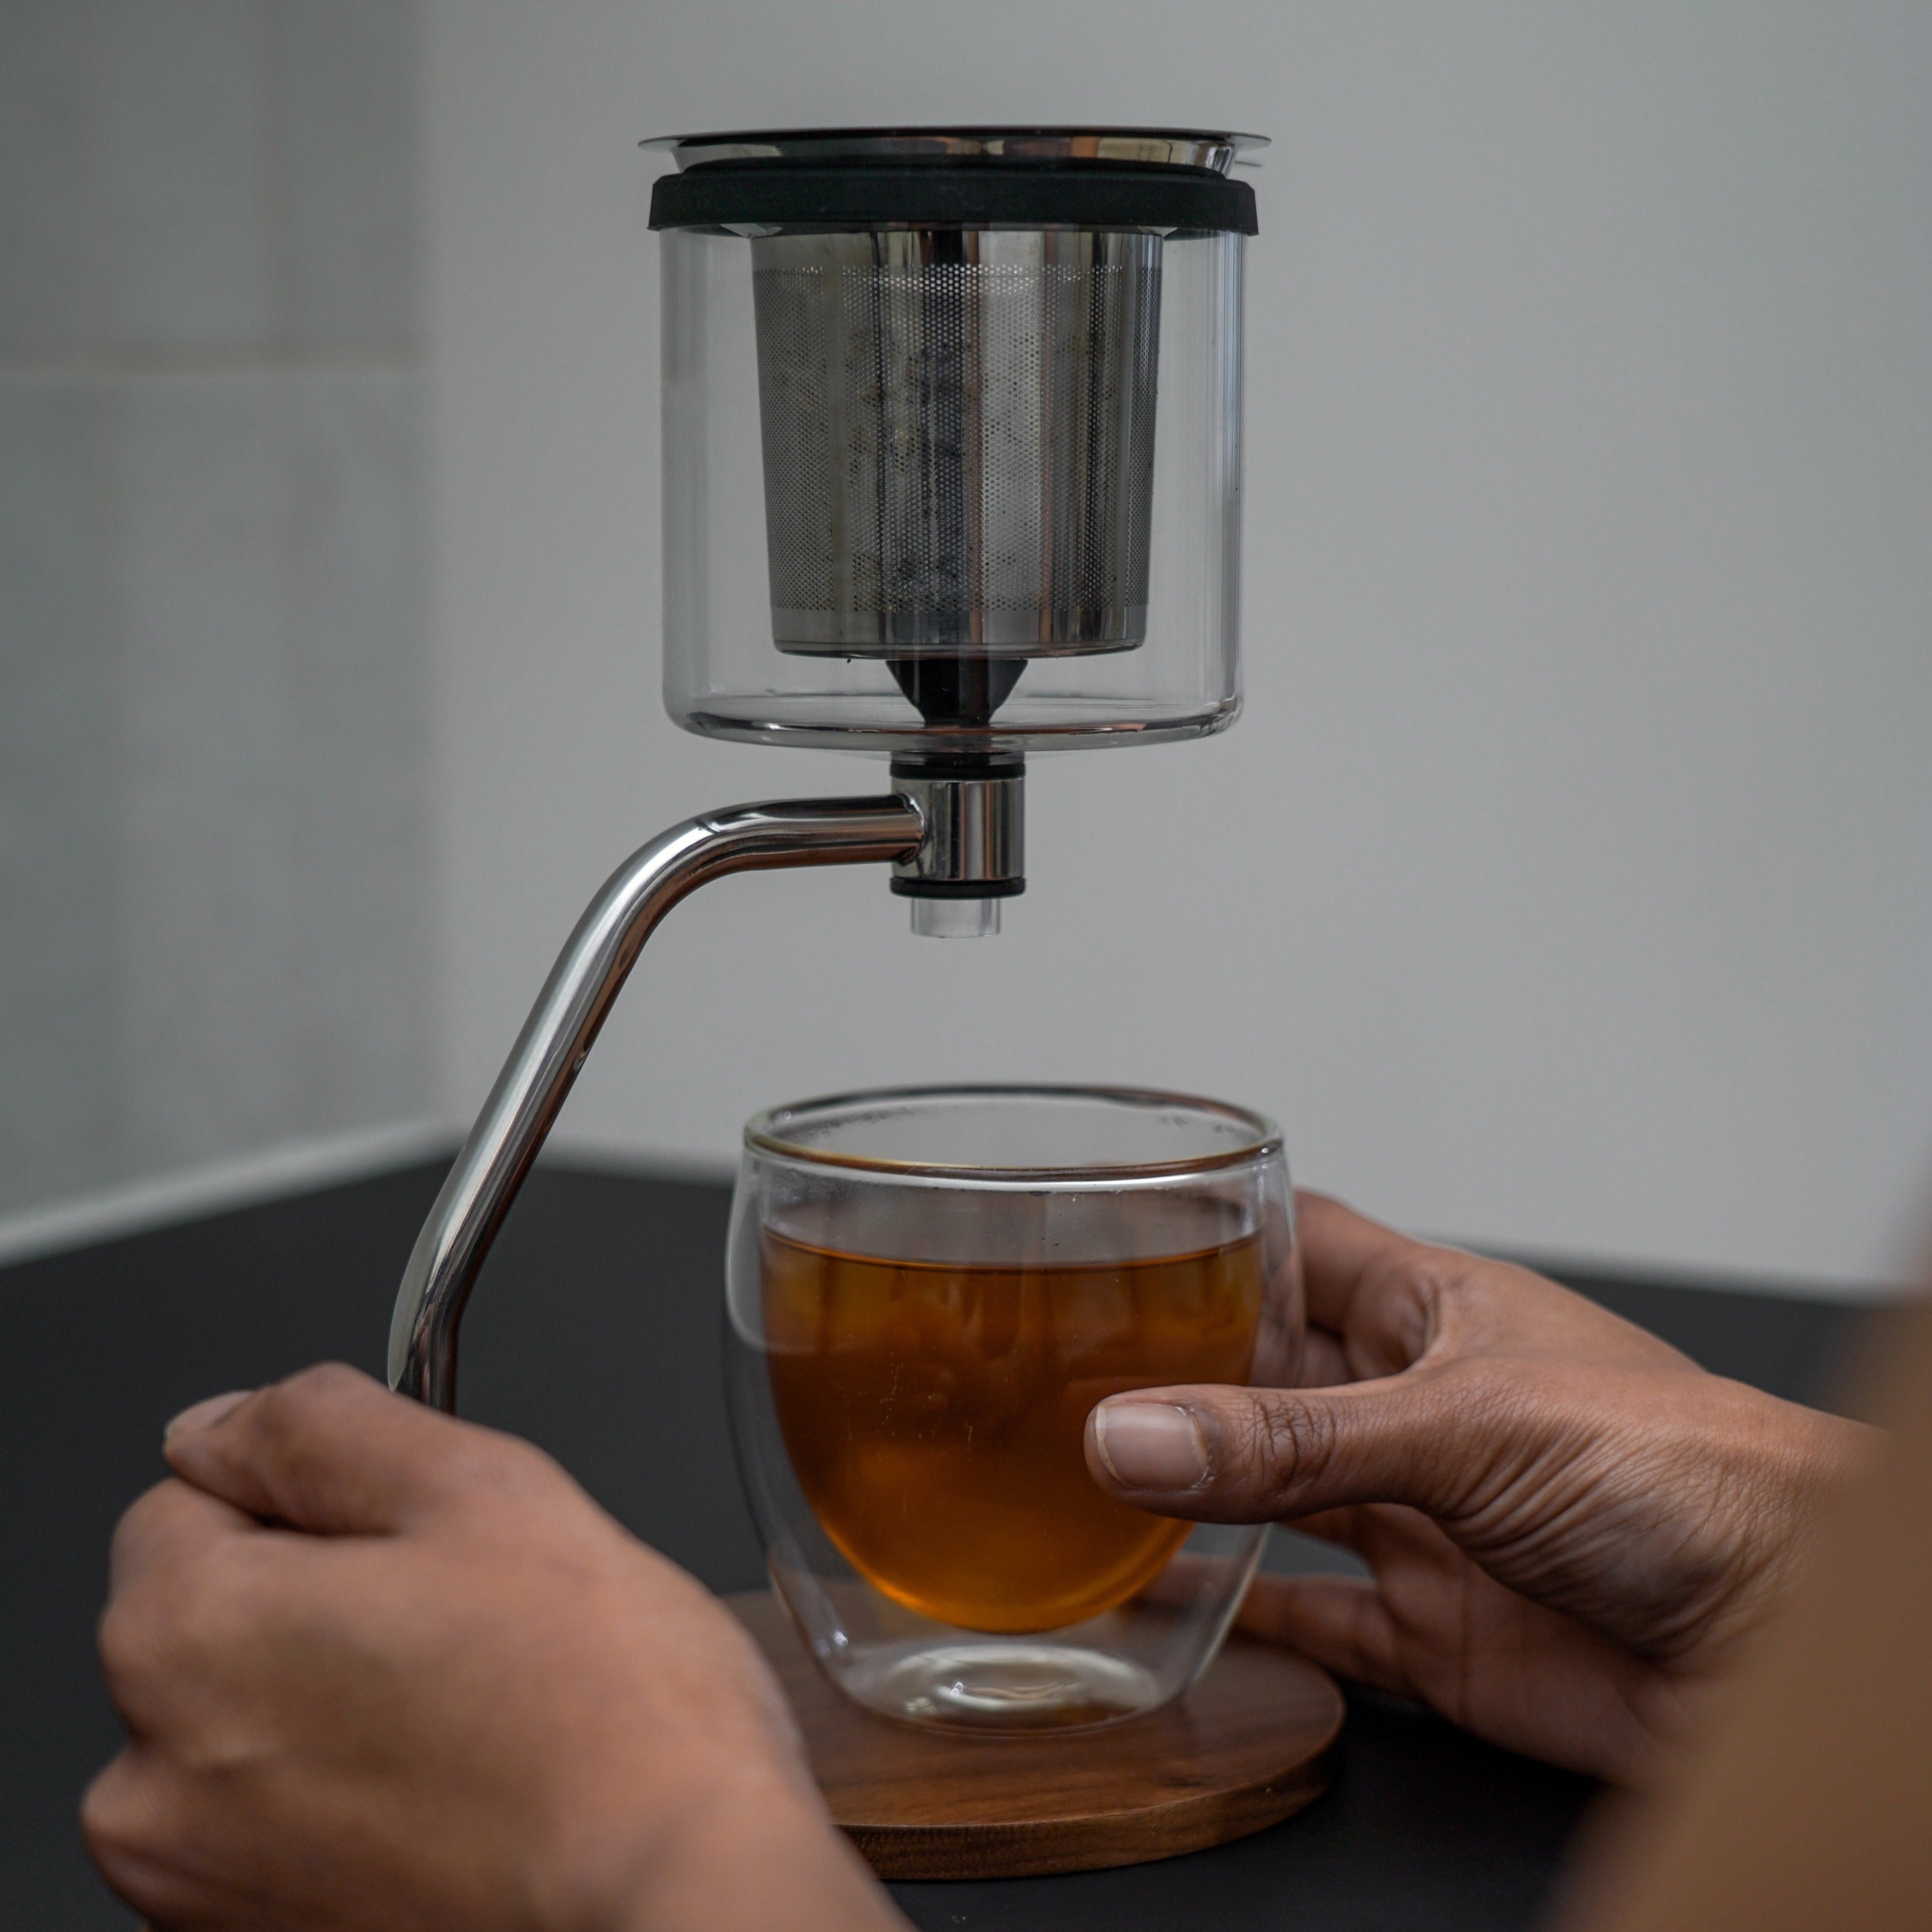 Joy Resolve Barisieur Tea and Coffee Alarm Clock - Black, Gifts